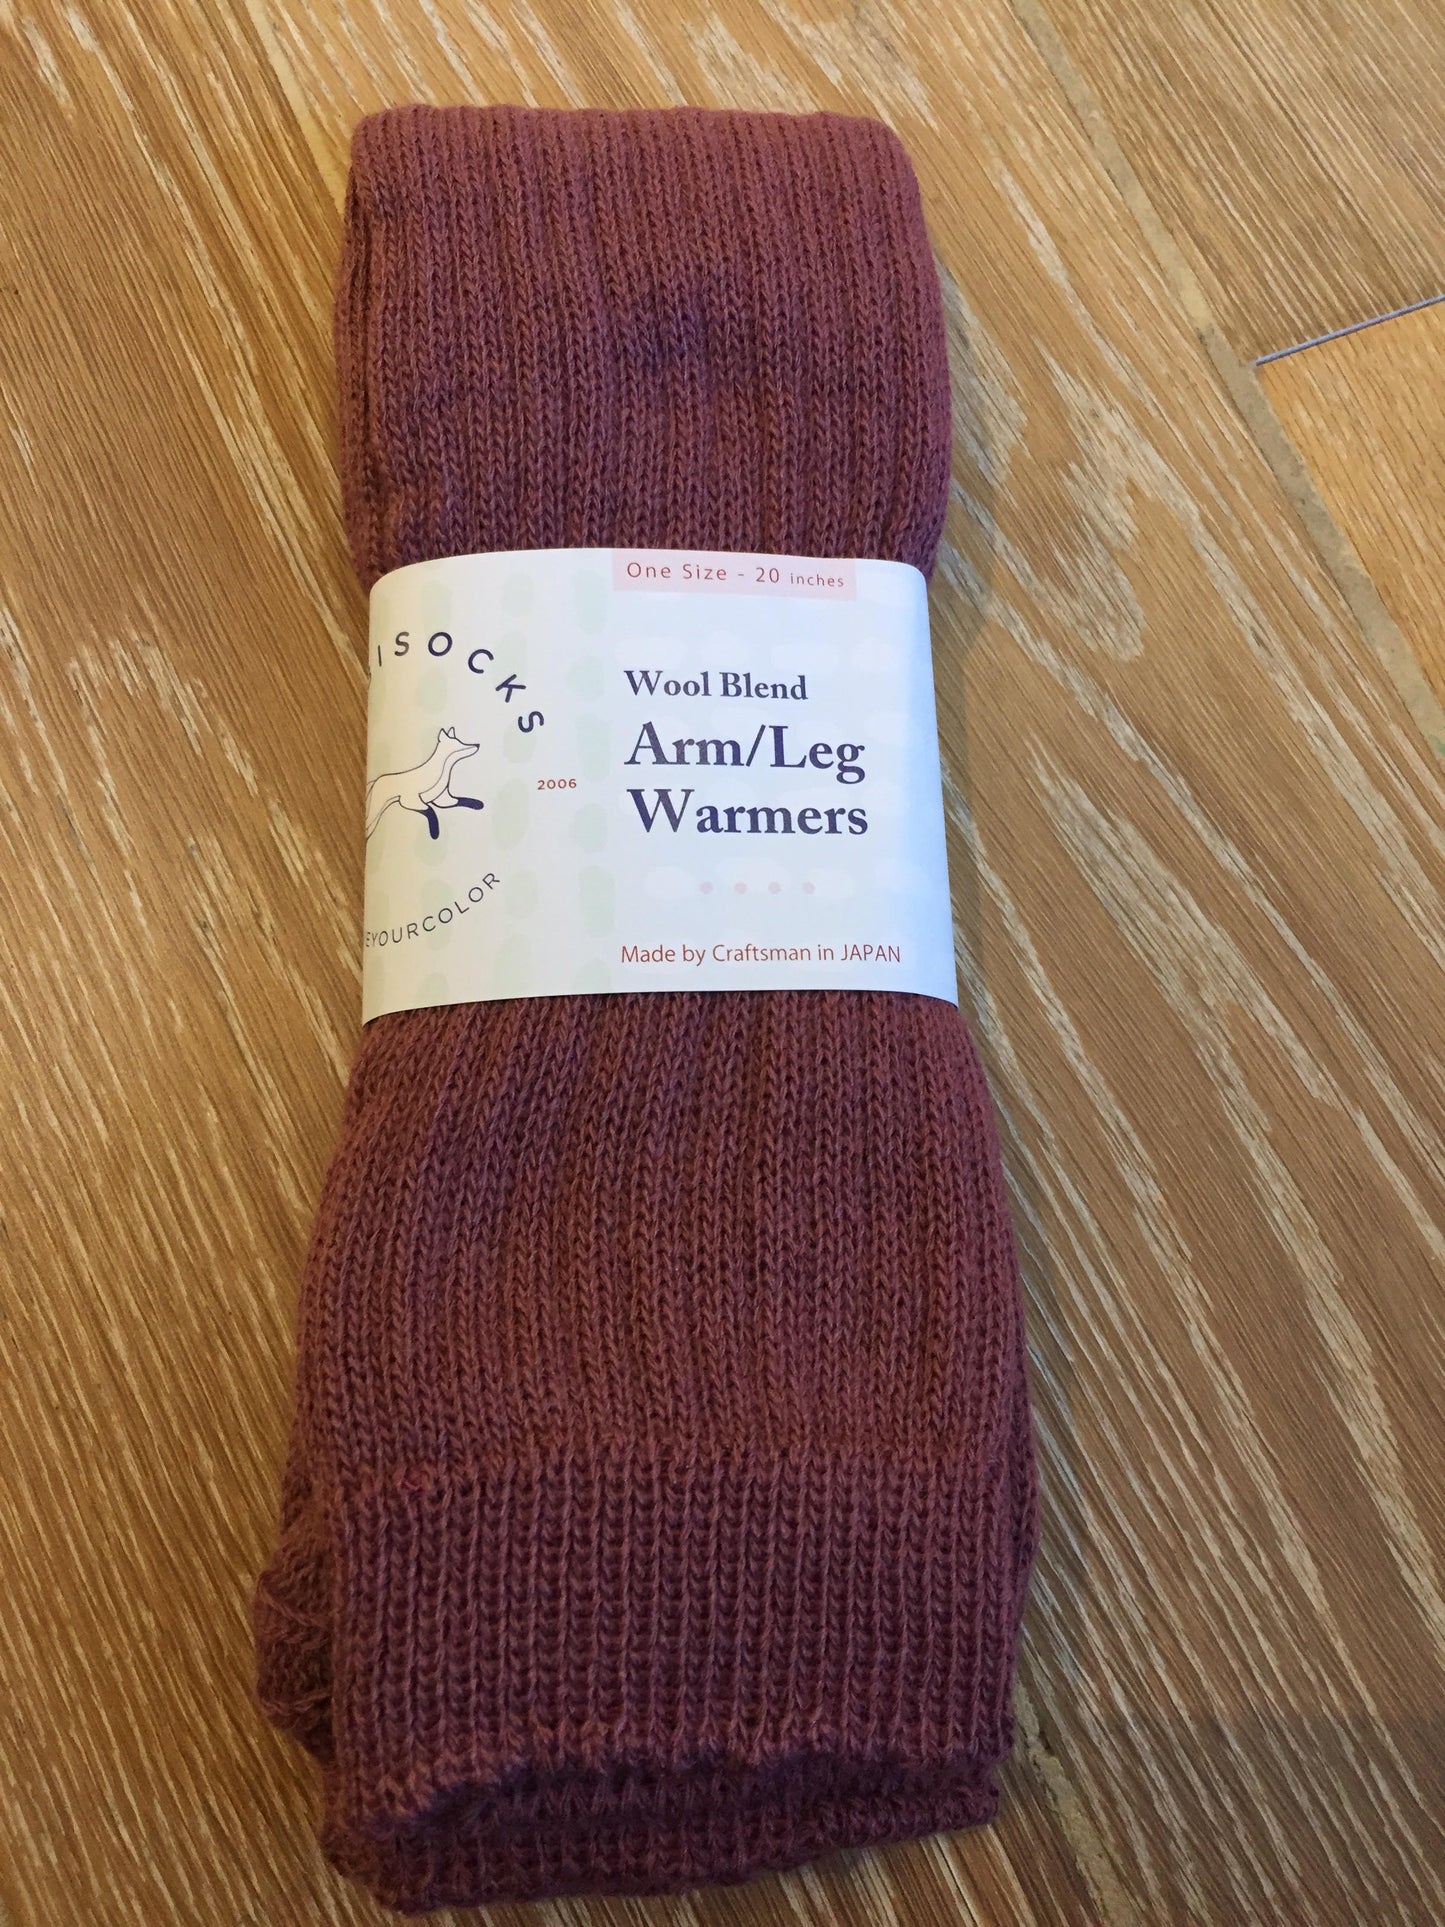 Wool blend Arm/Leg Warmers